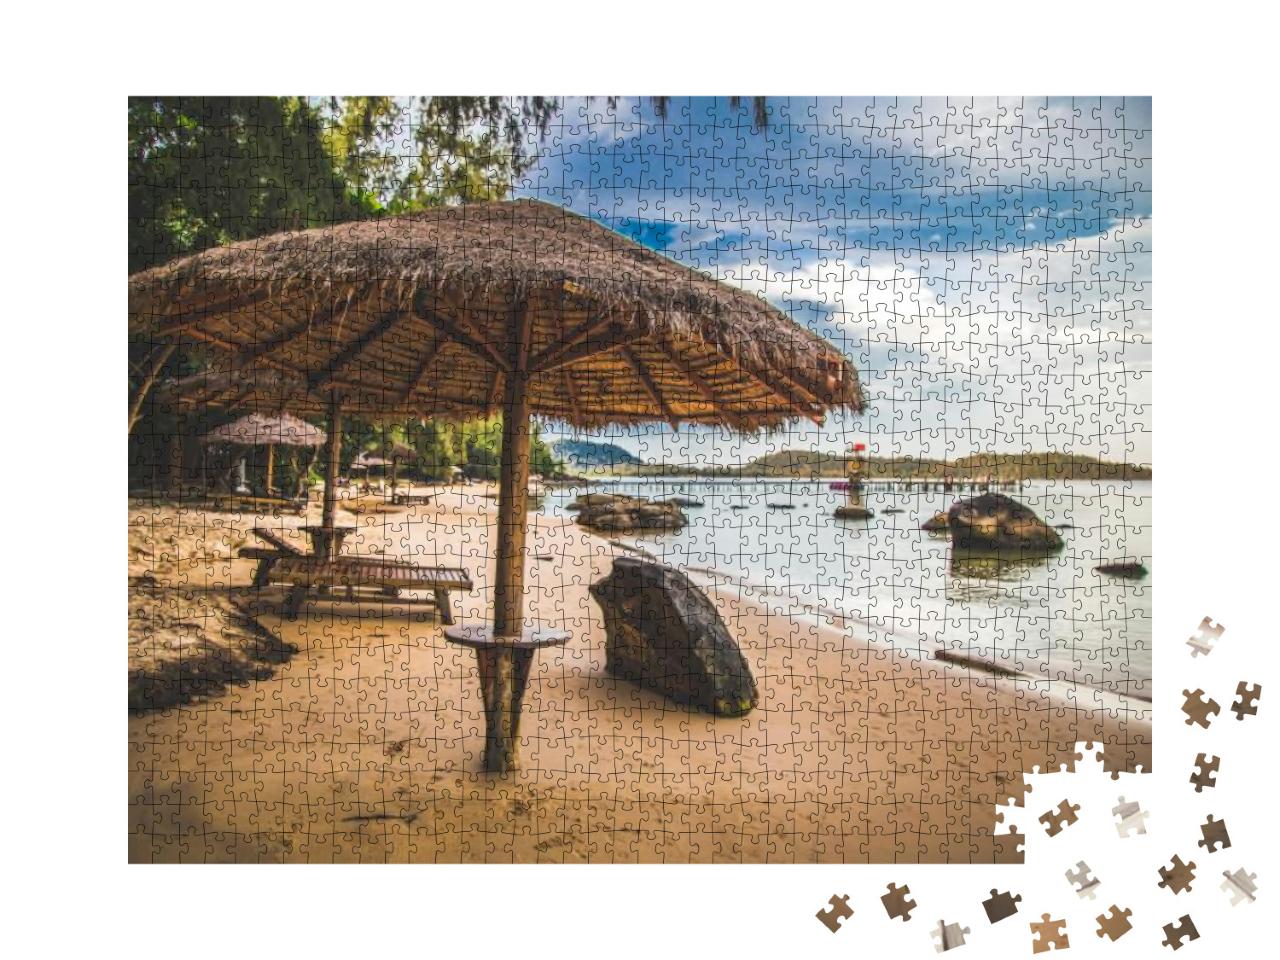 Puzzle 1000 Teile „Koh Rong Insel, Sonnenuntergang auf Koh Rong, Kambodscha“